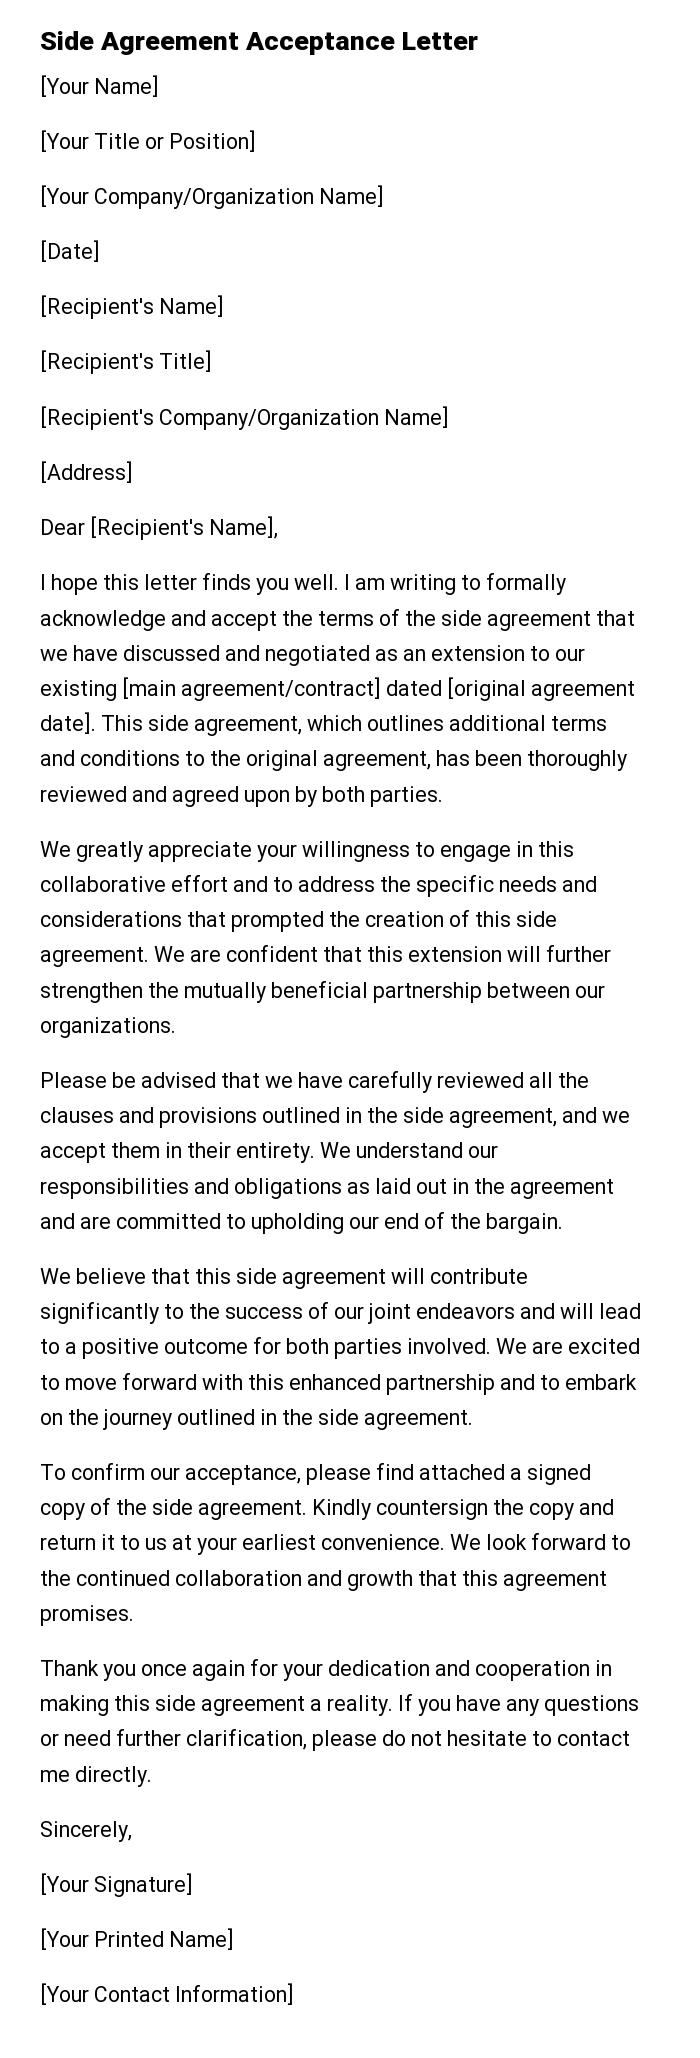 Side Agreement Acceptance Letter